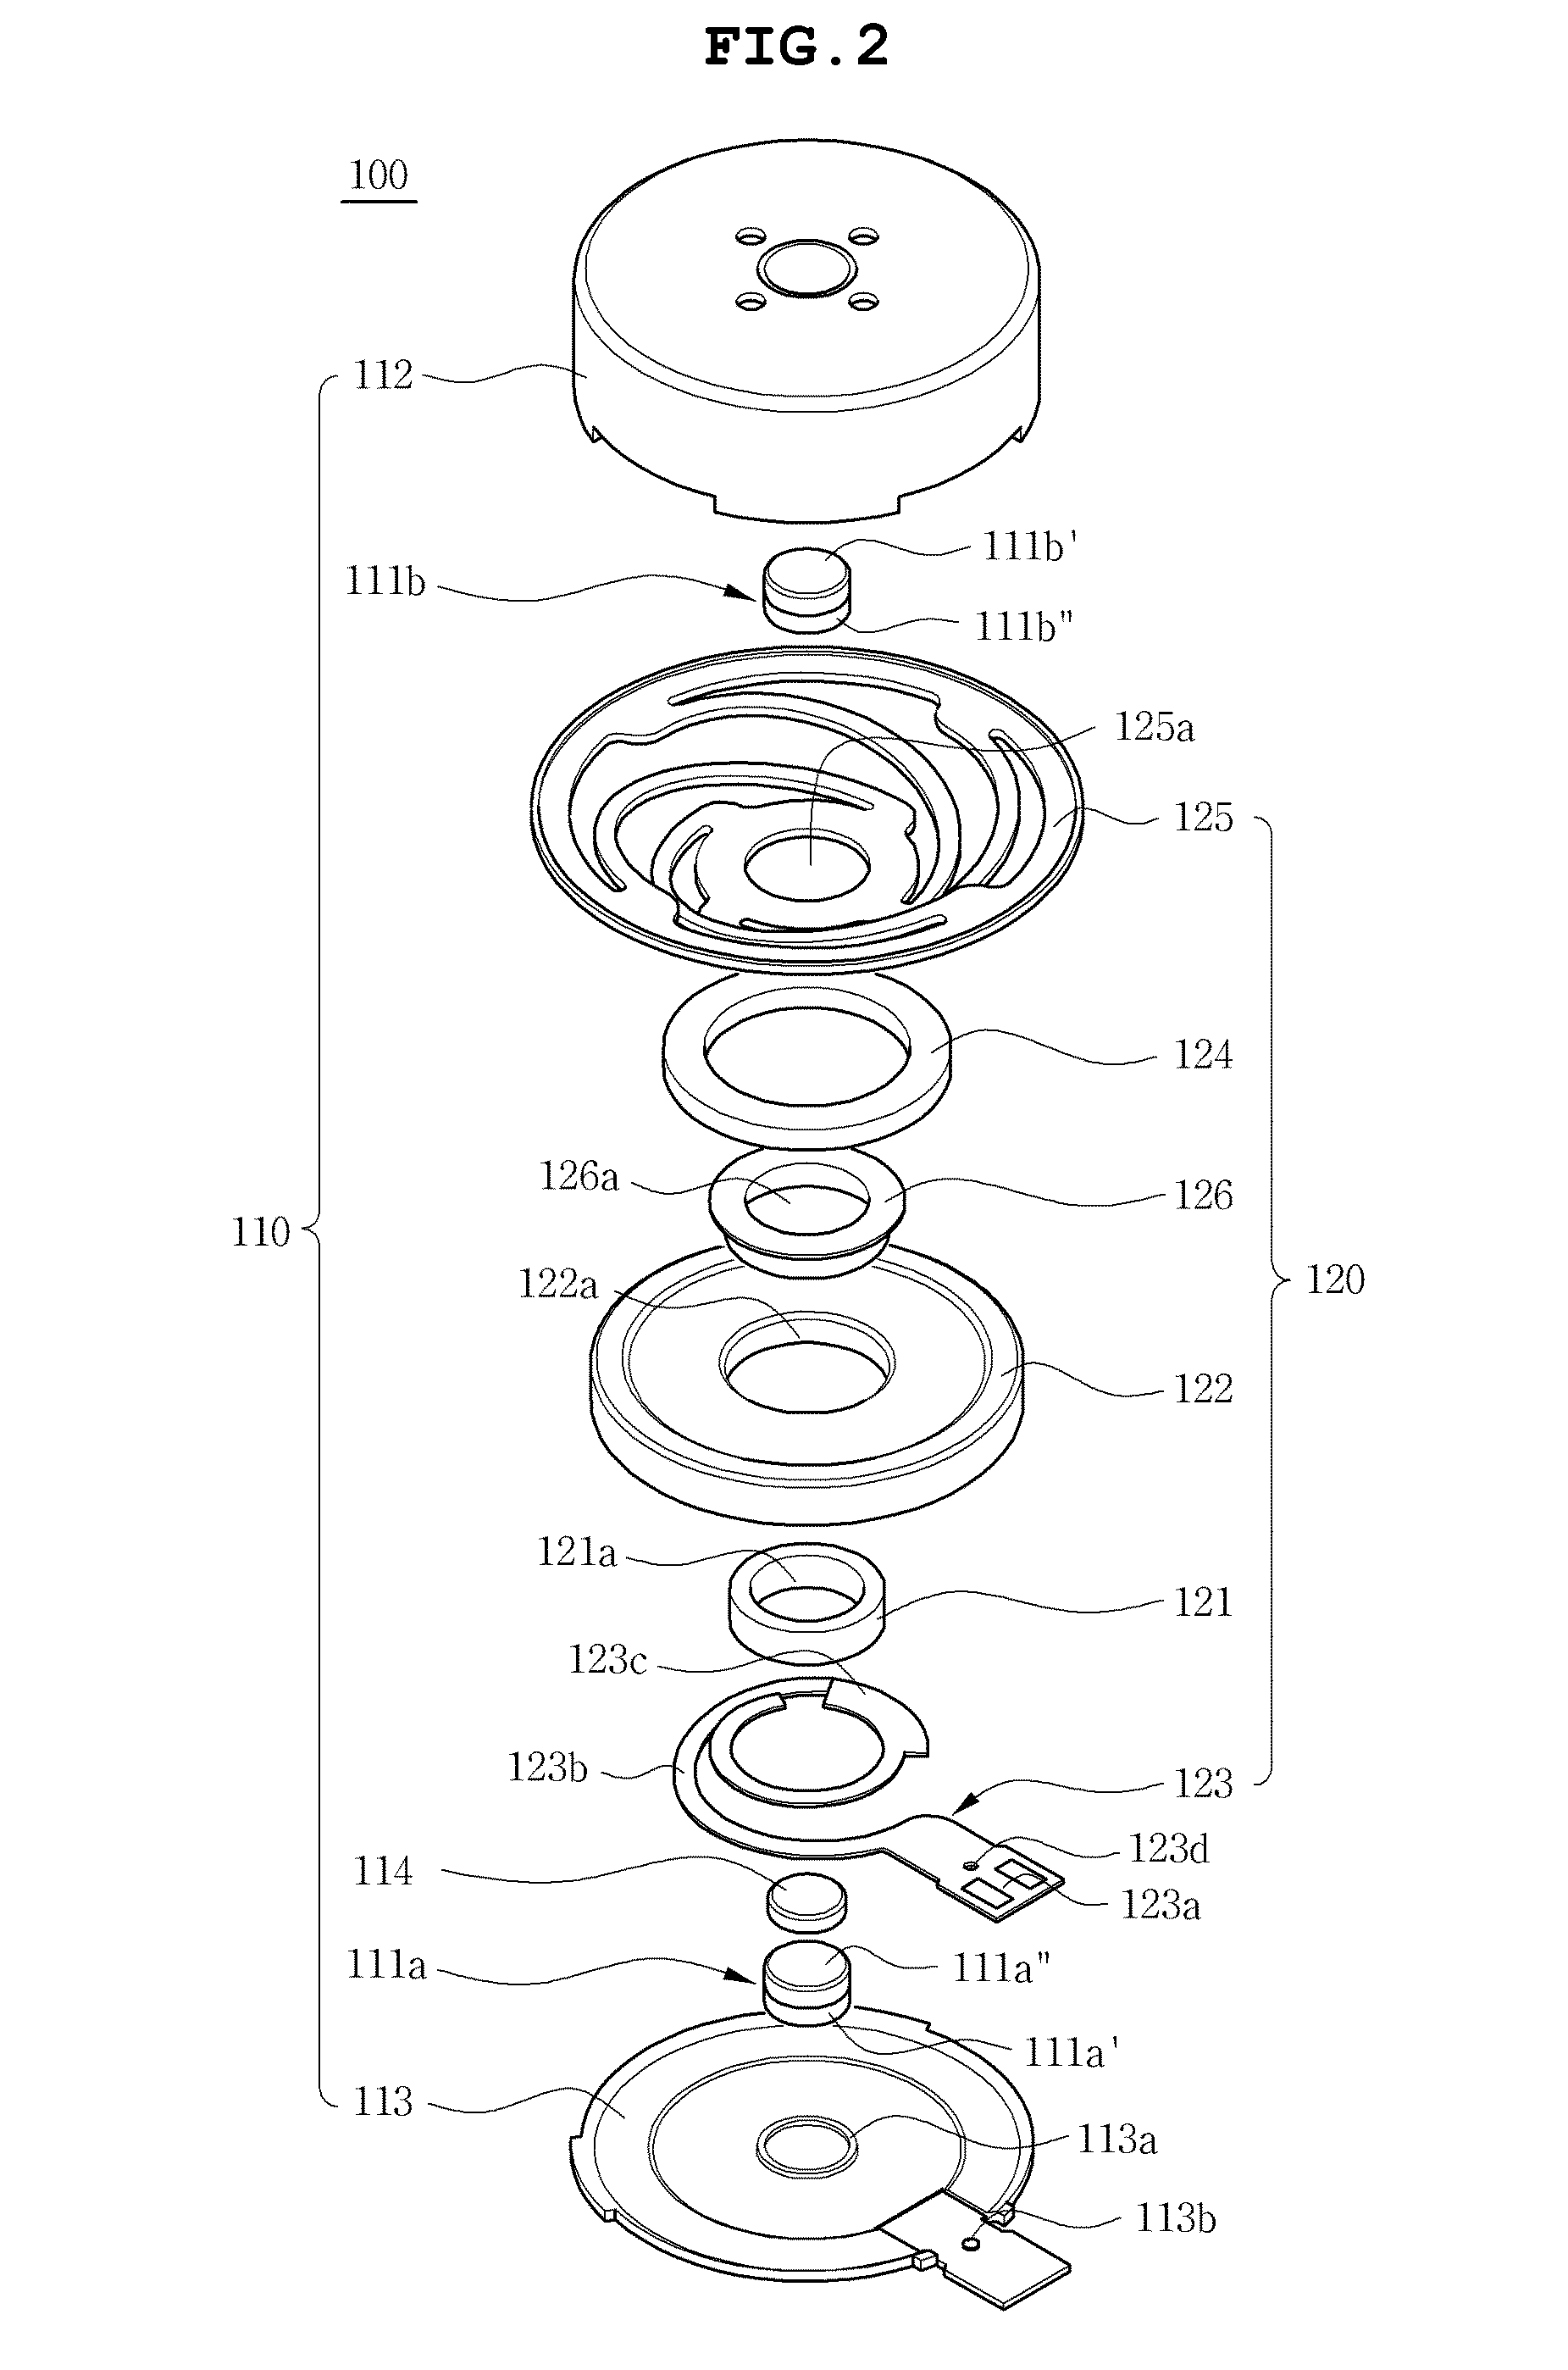 Linear vibration motor